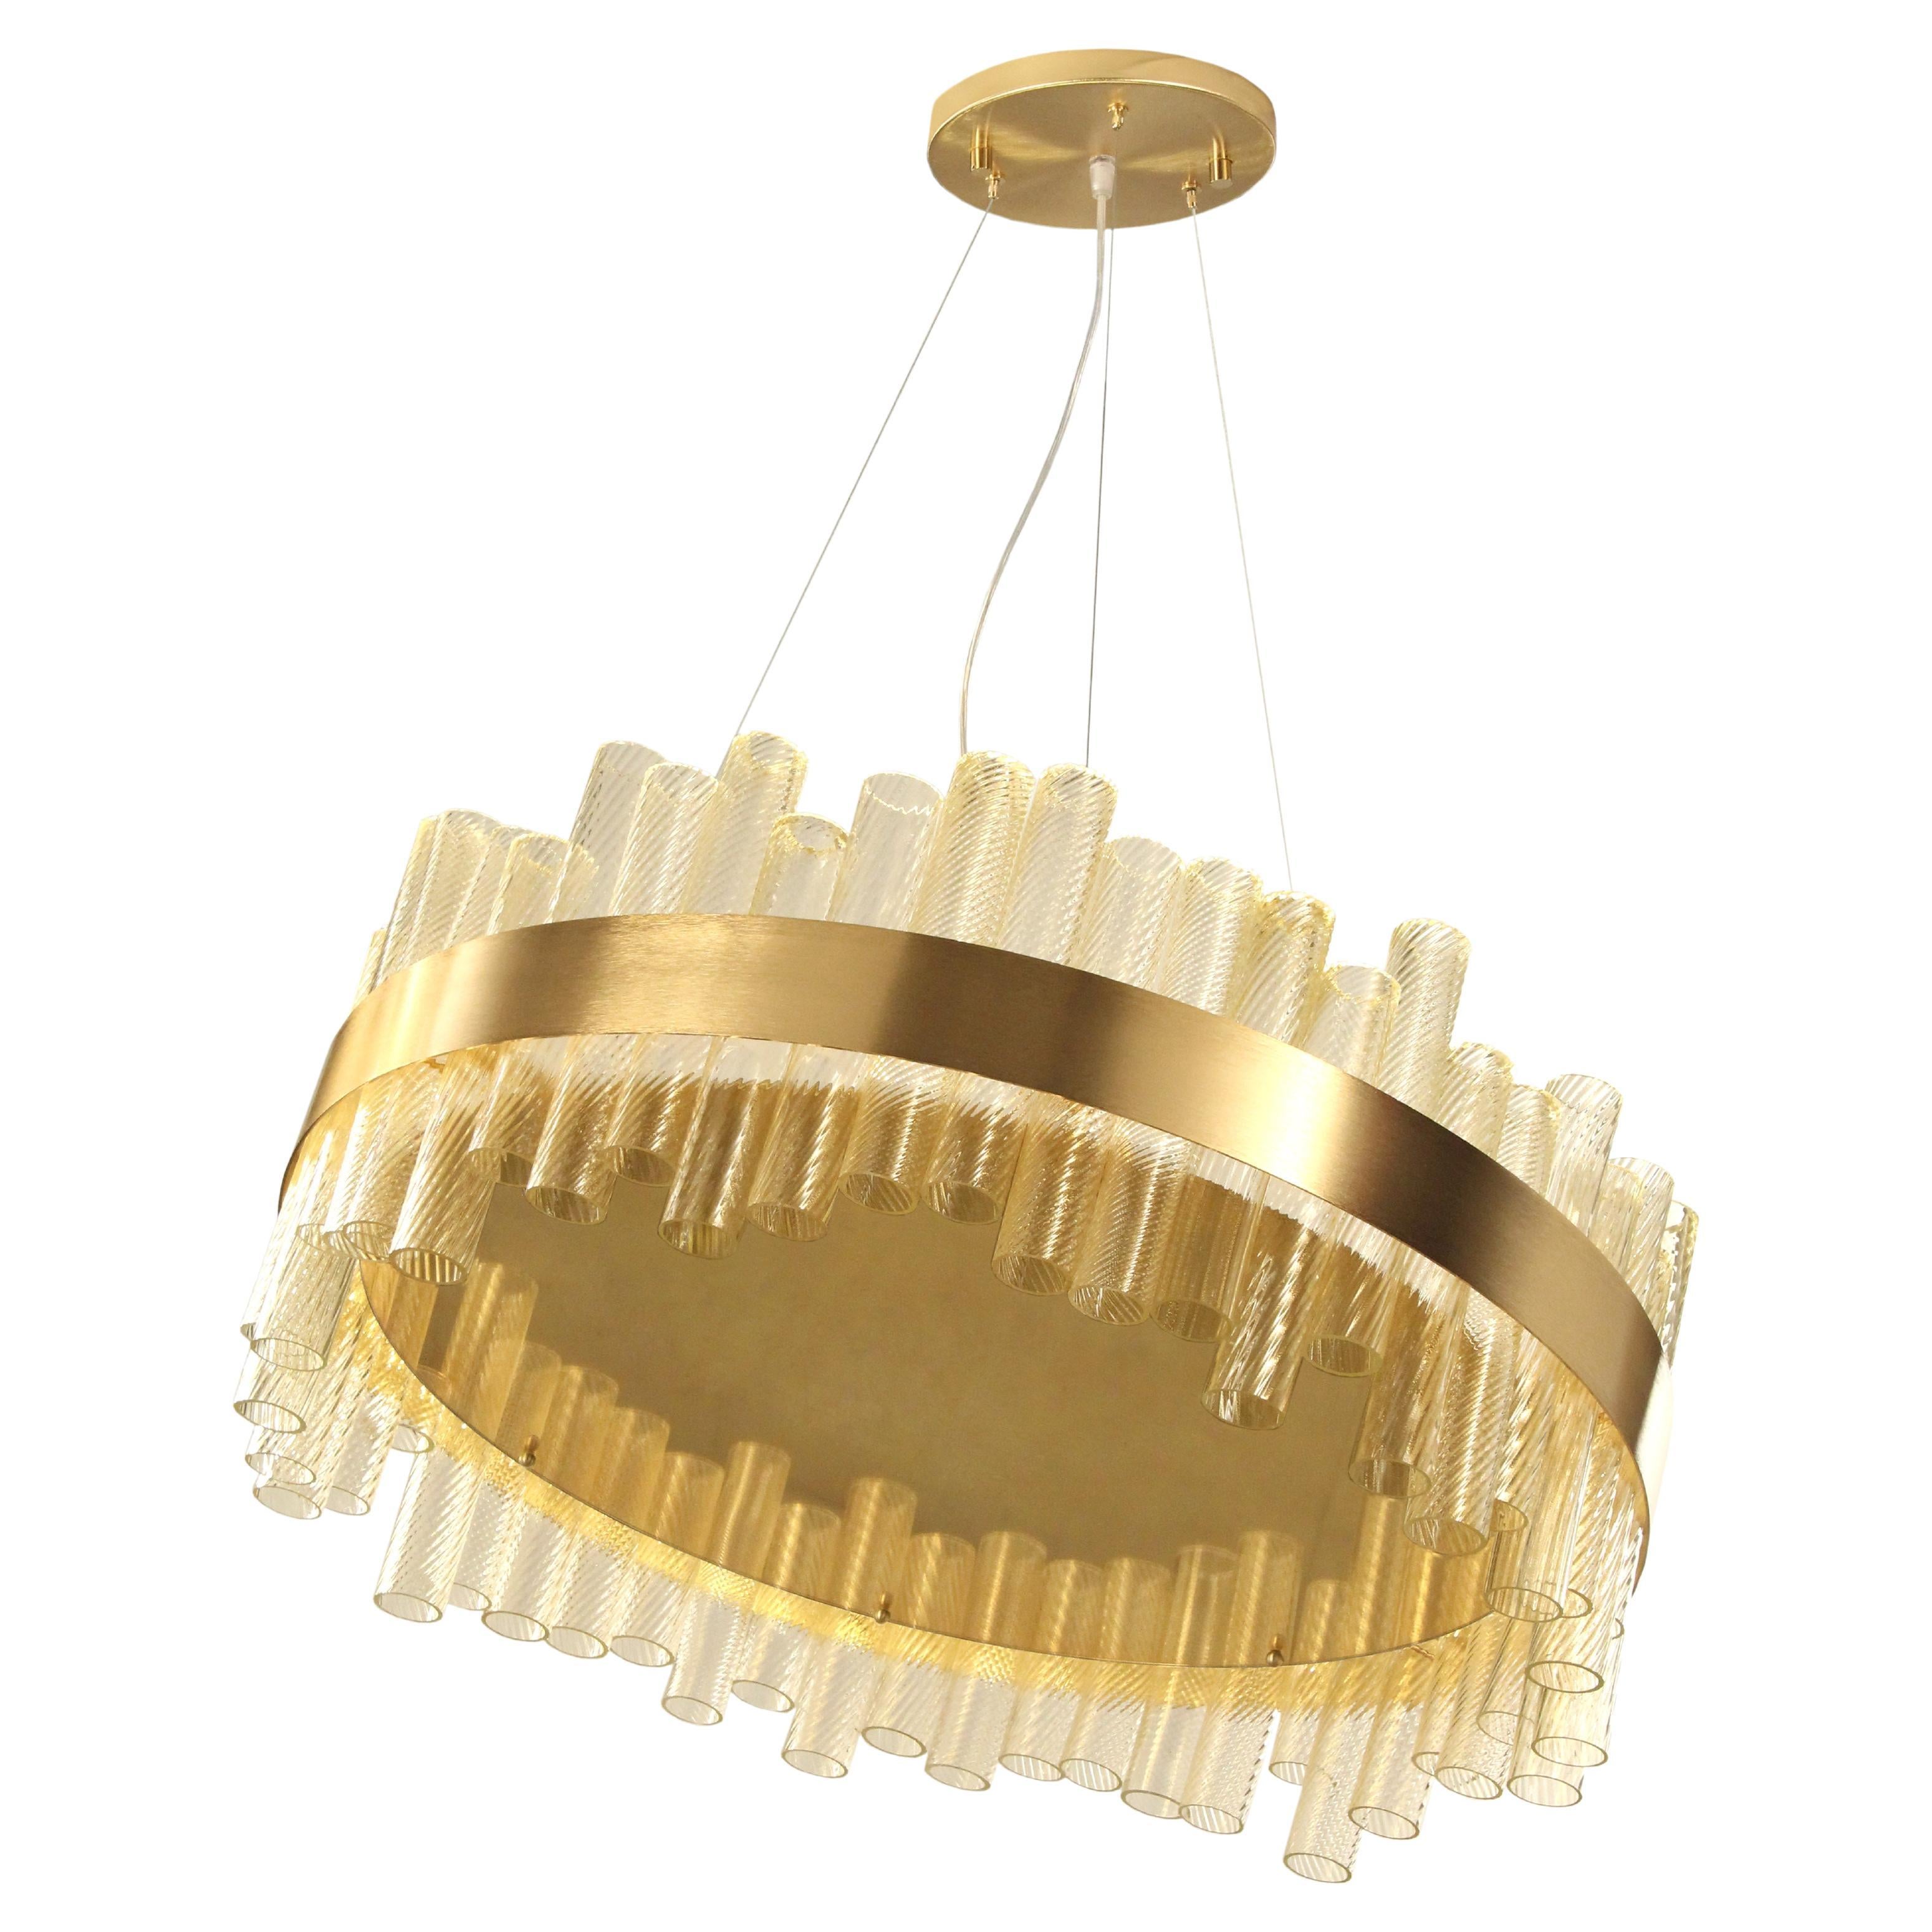 Artistic Suspension Gold Leaf Glass Tubes, Brushed Gold Fixture by Multiforme